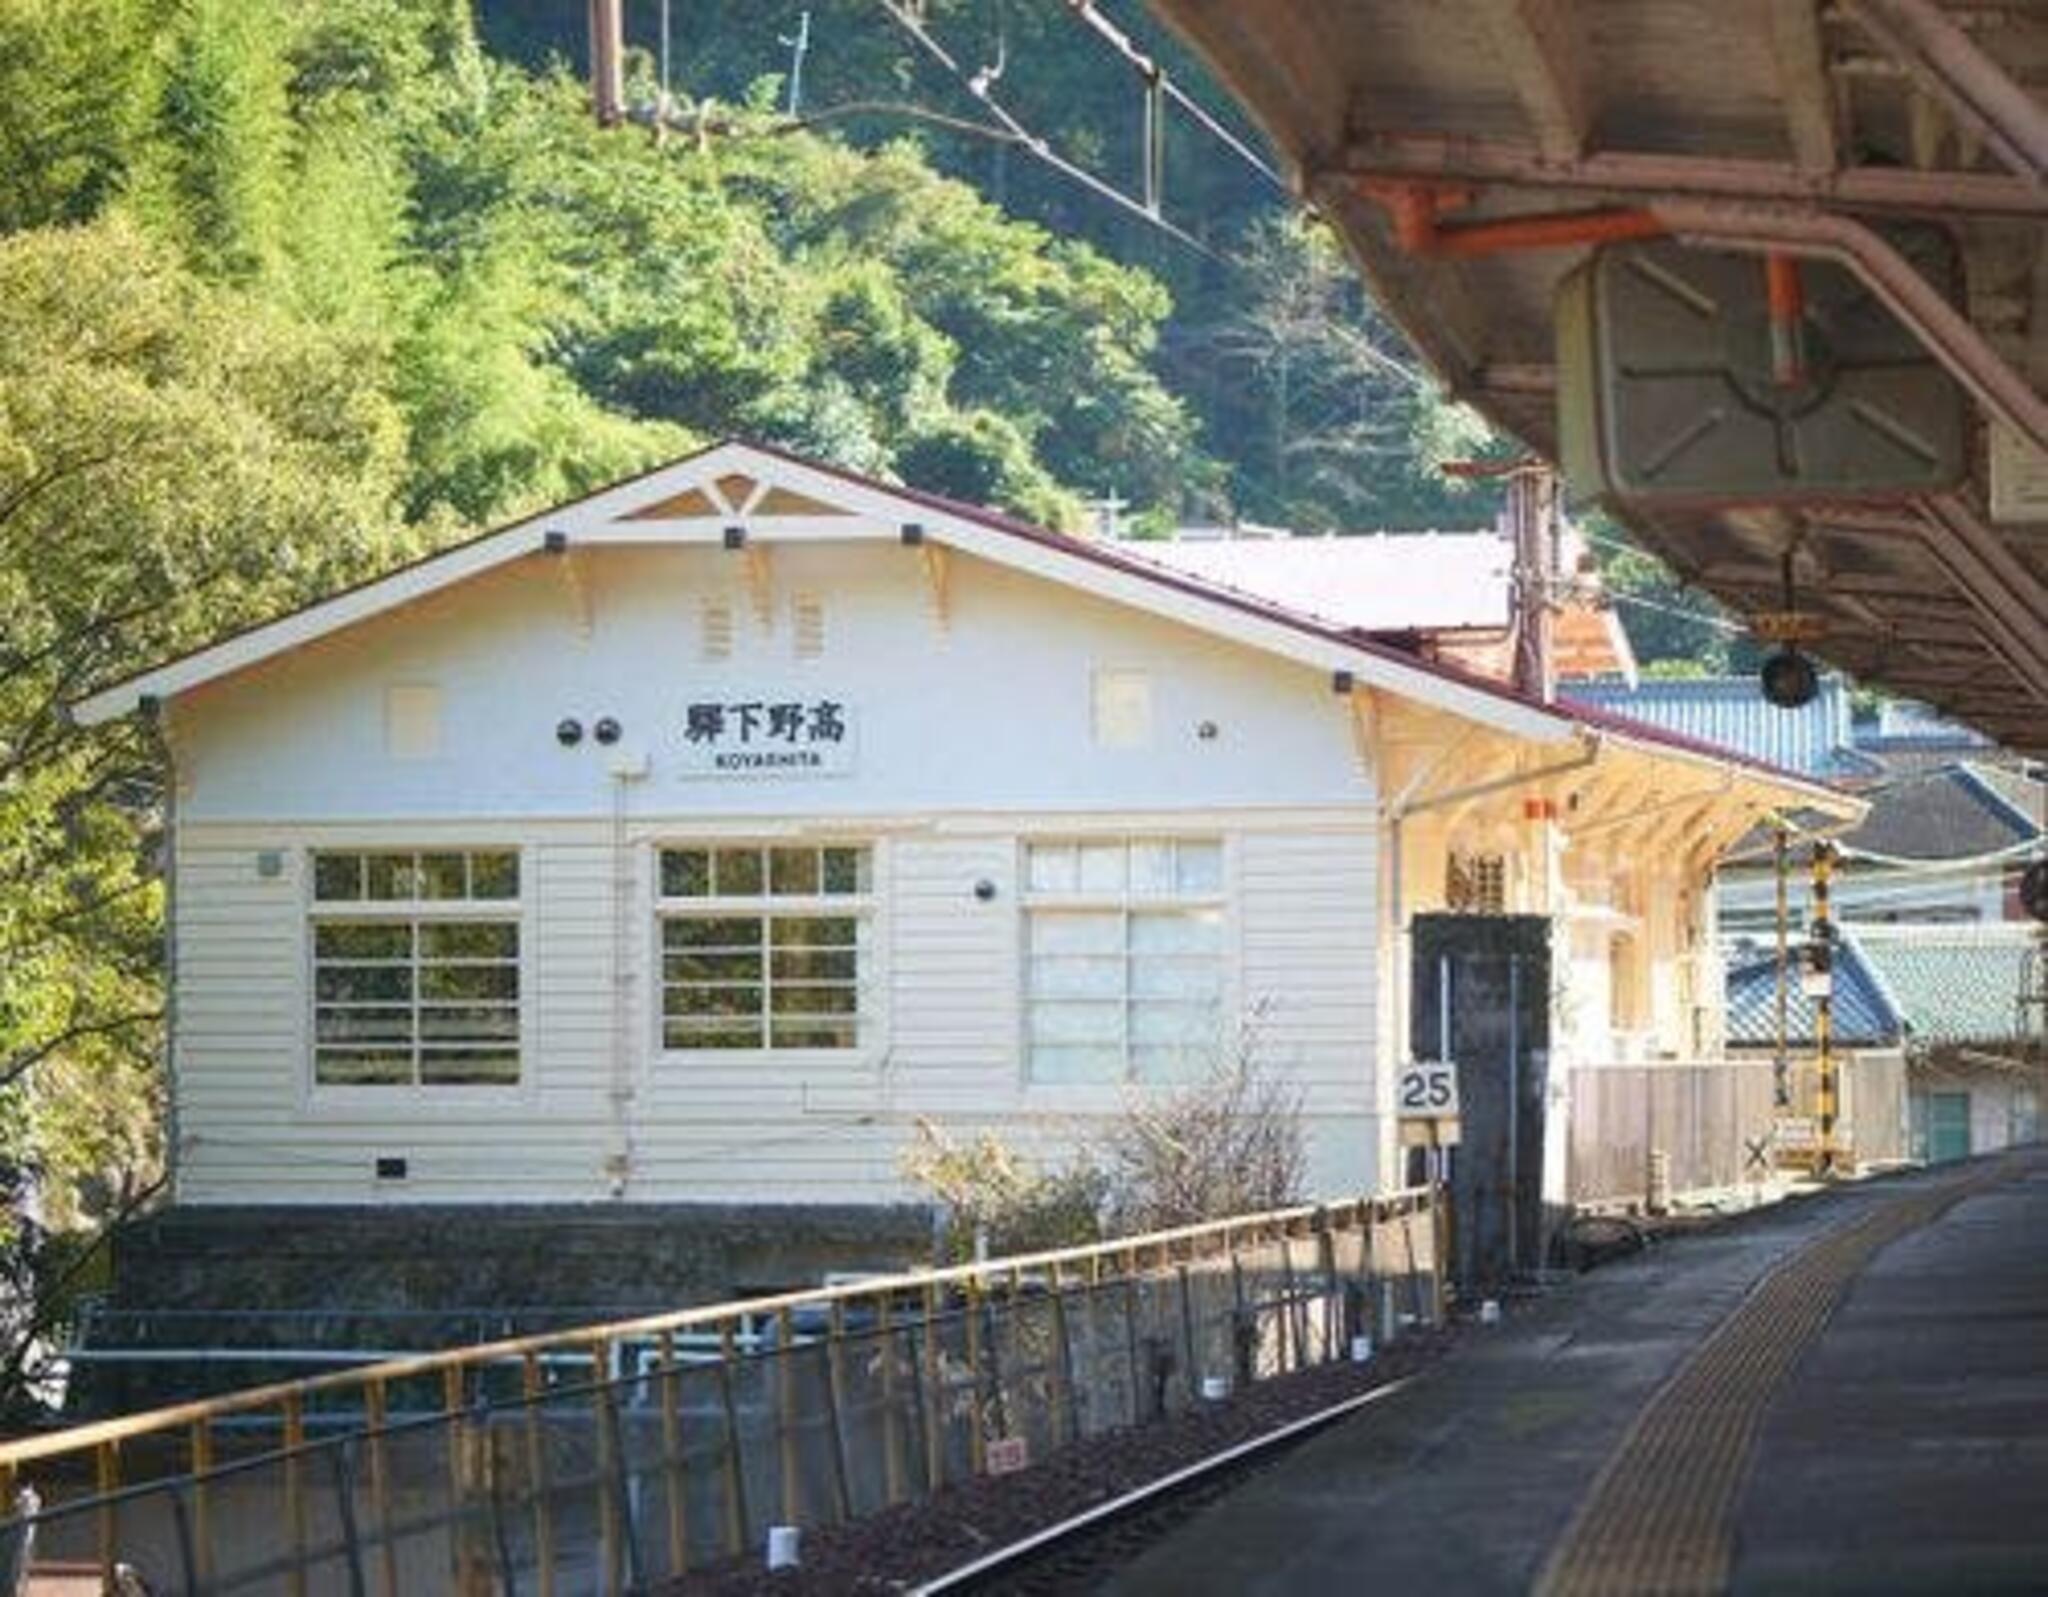 NIPPONIA HOTEL 高野山 参詣鉄道 Operated by KIRINJIの代表写真2